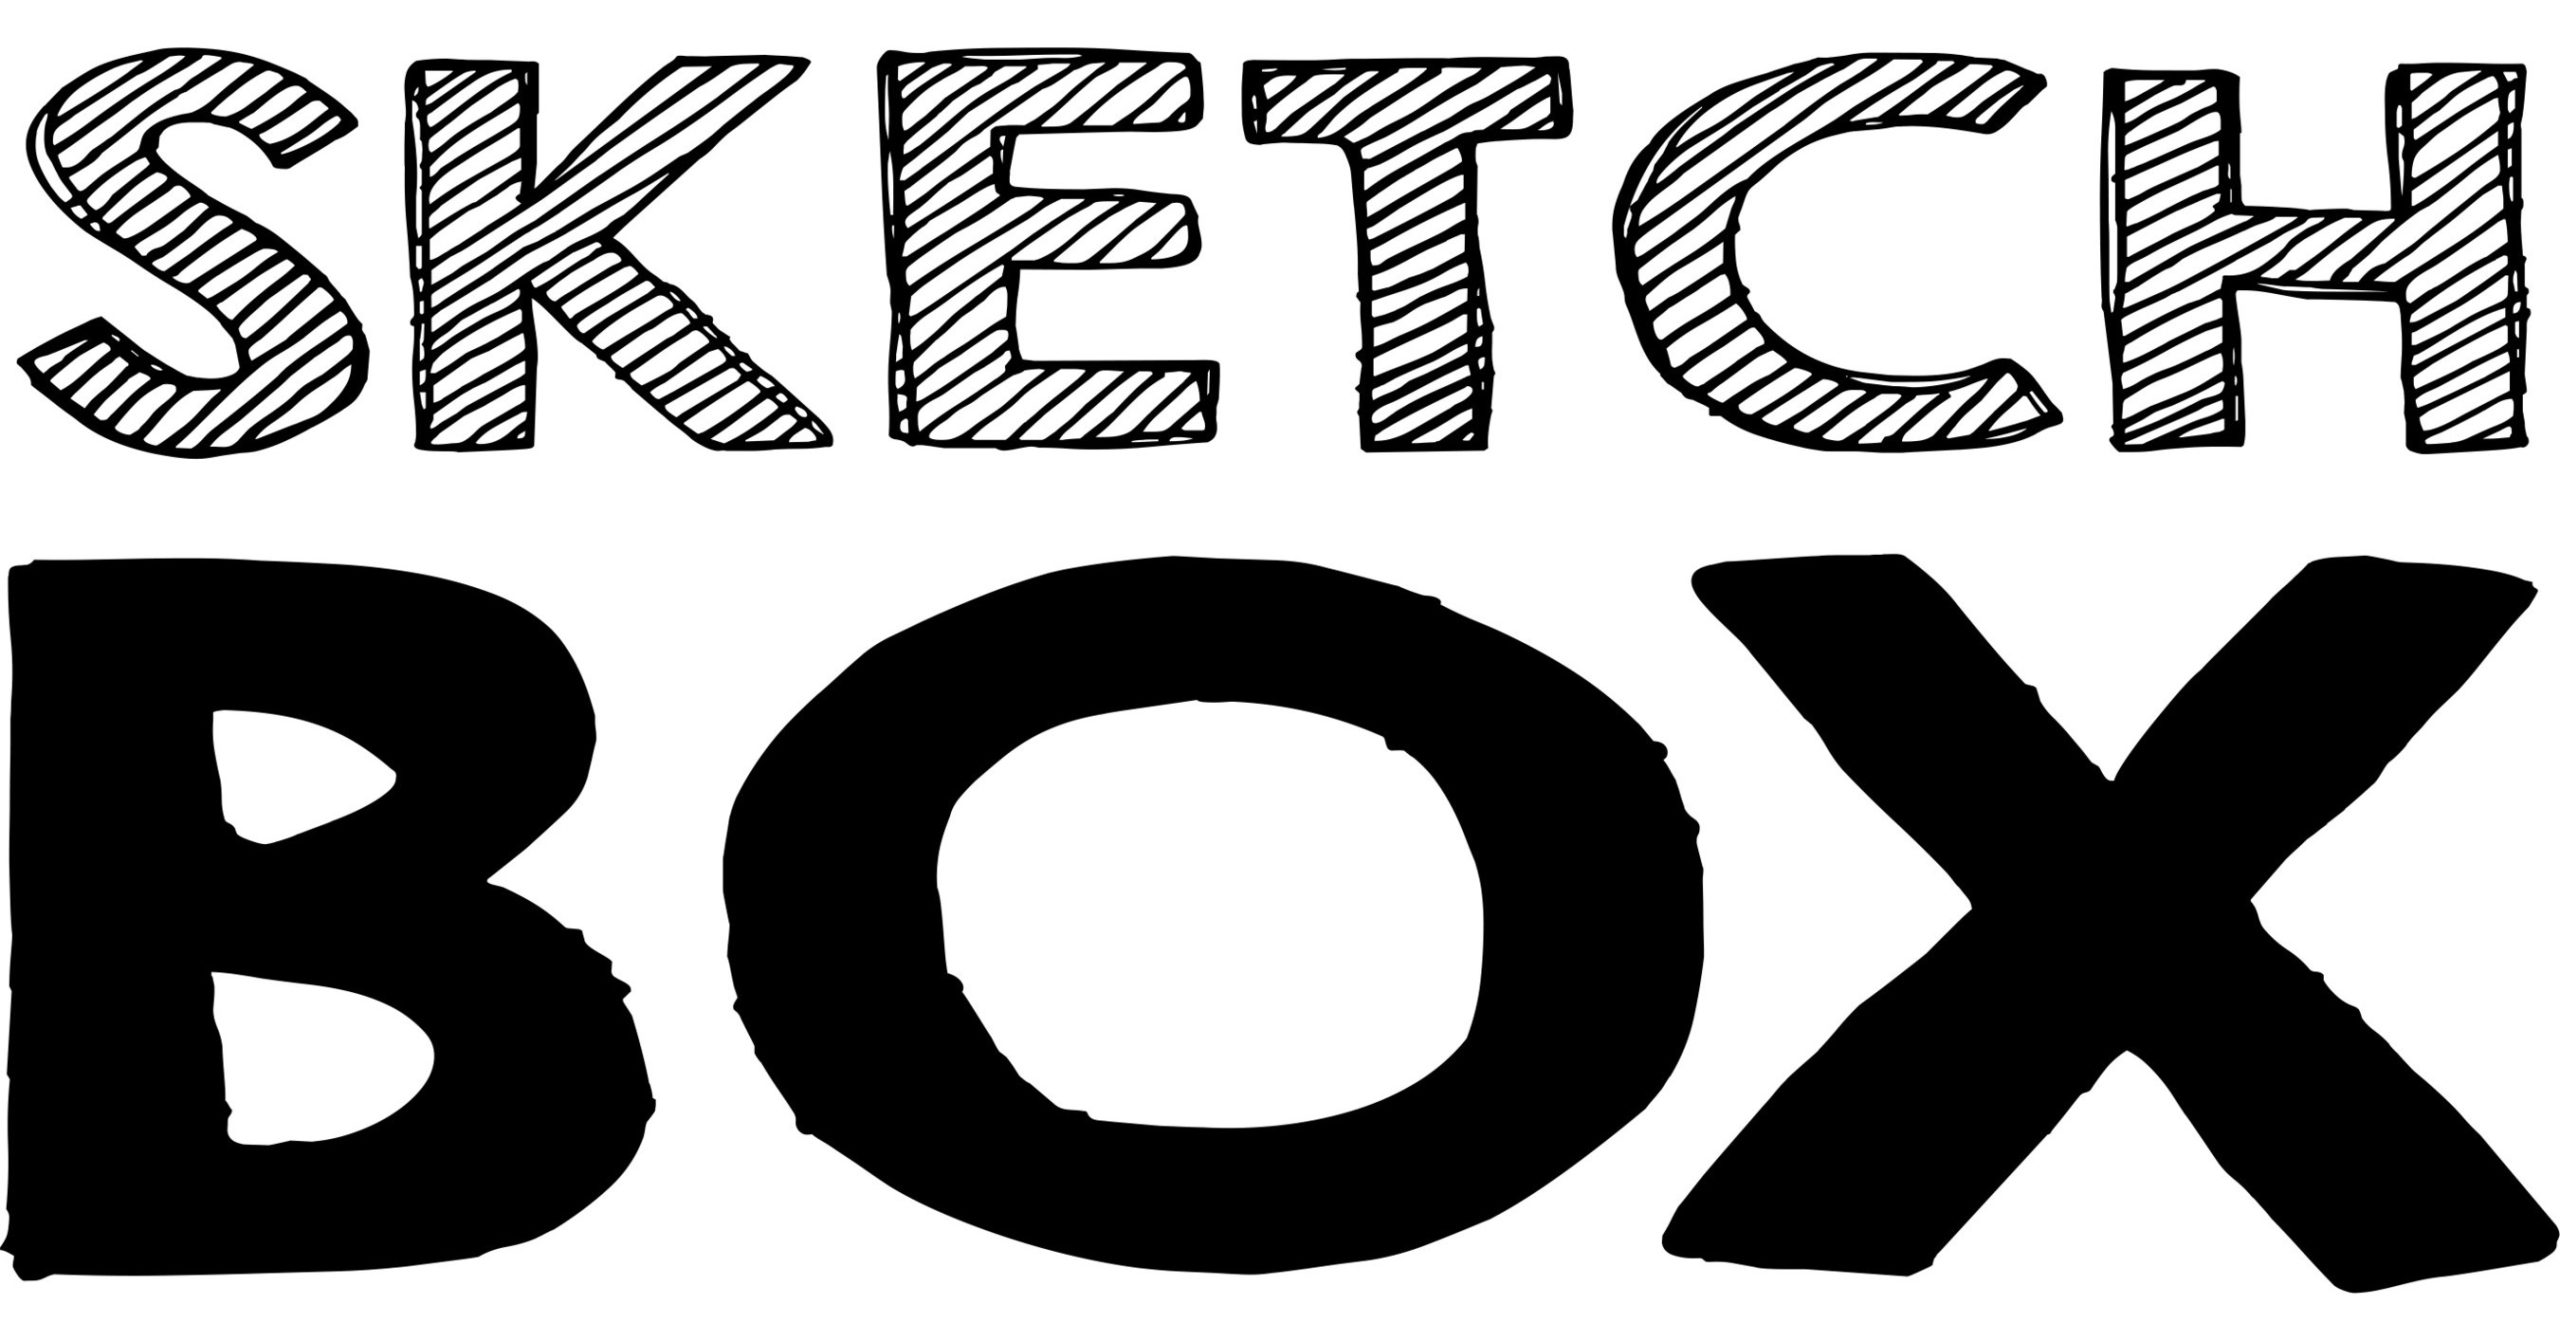 sketchbox web app